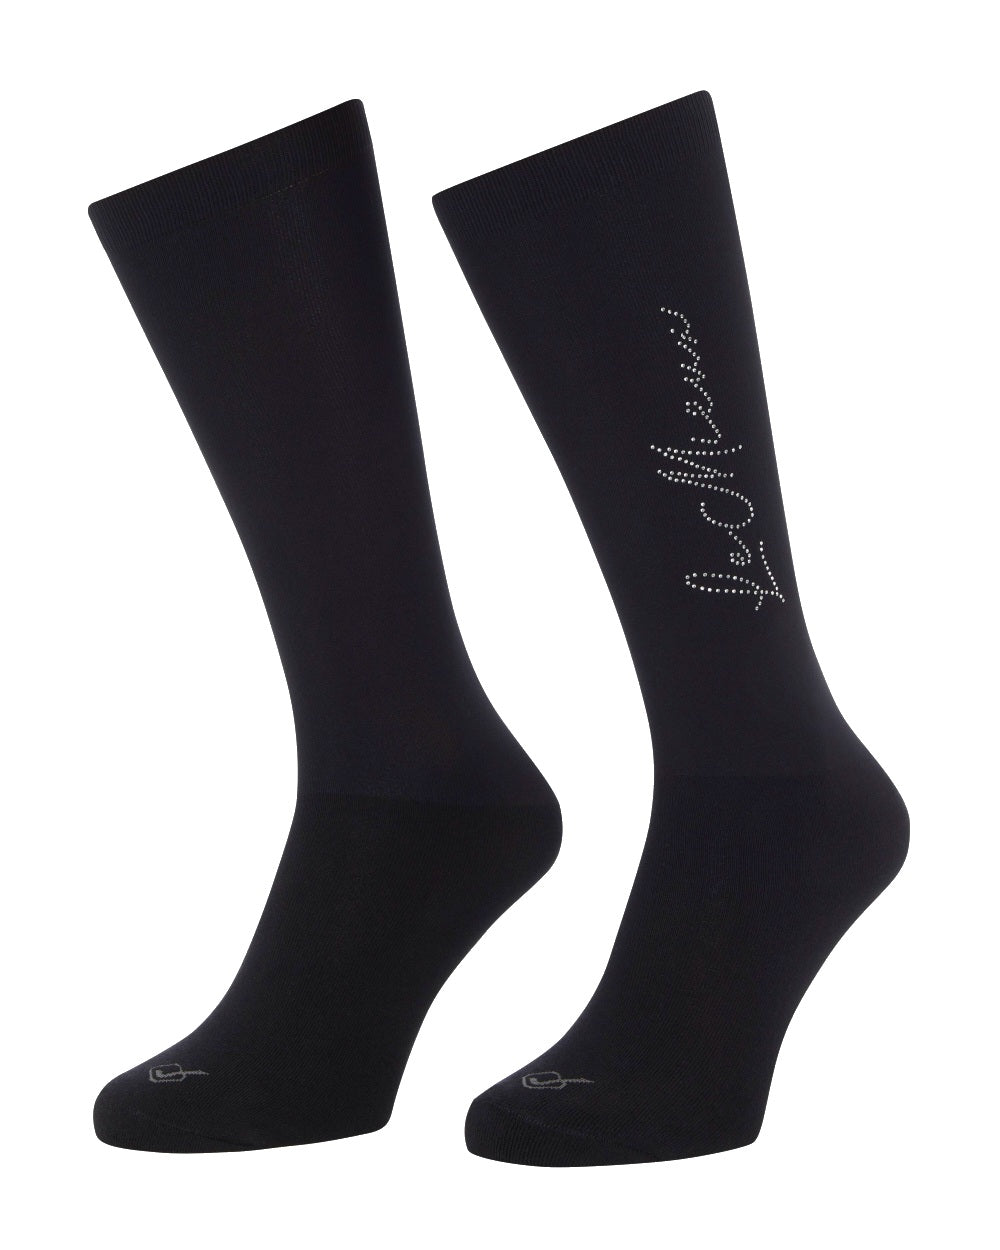 Black coloured LeMieux Sparkle Competition Socks on white background 